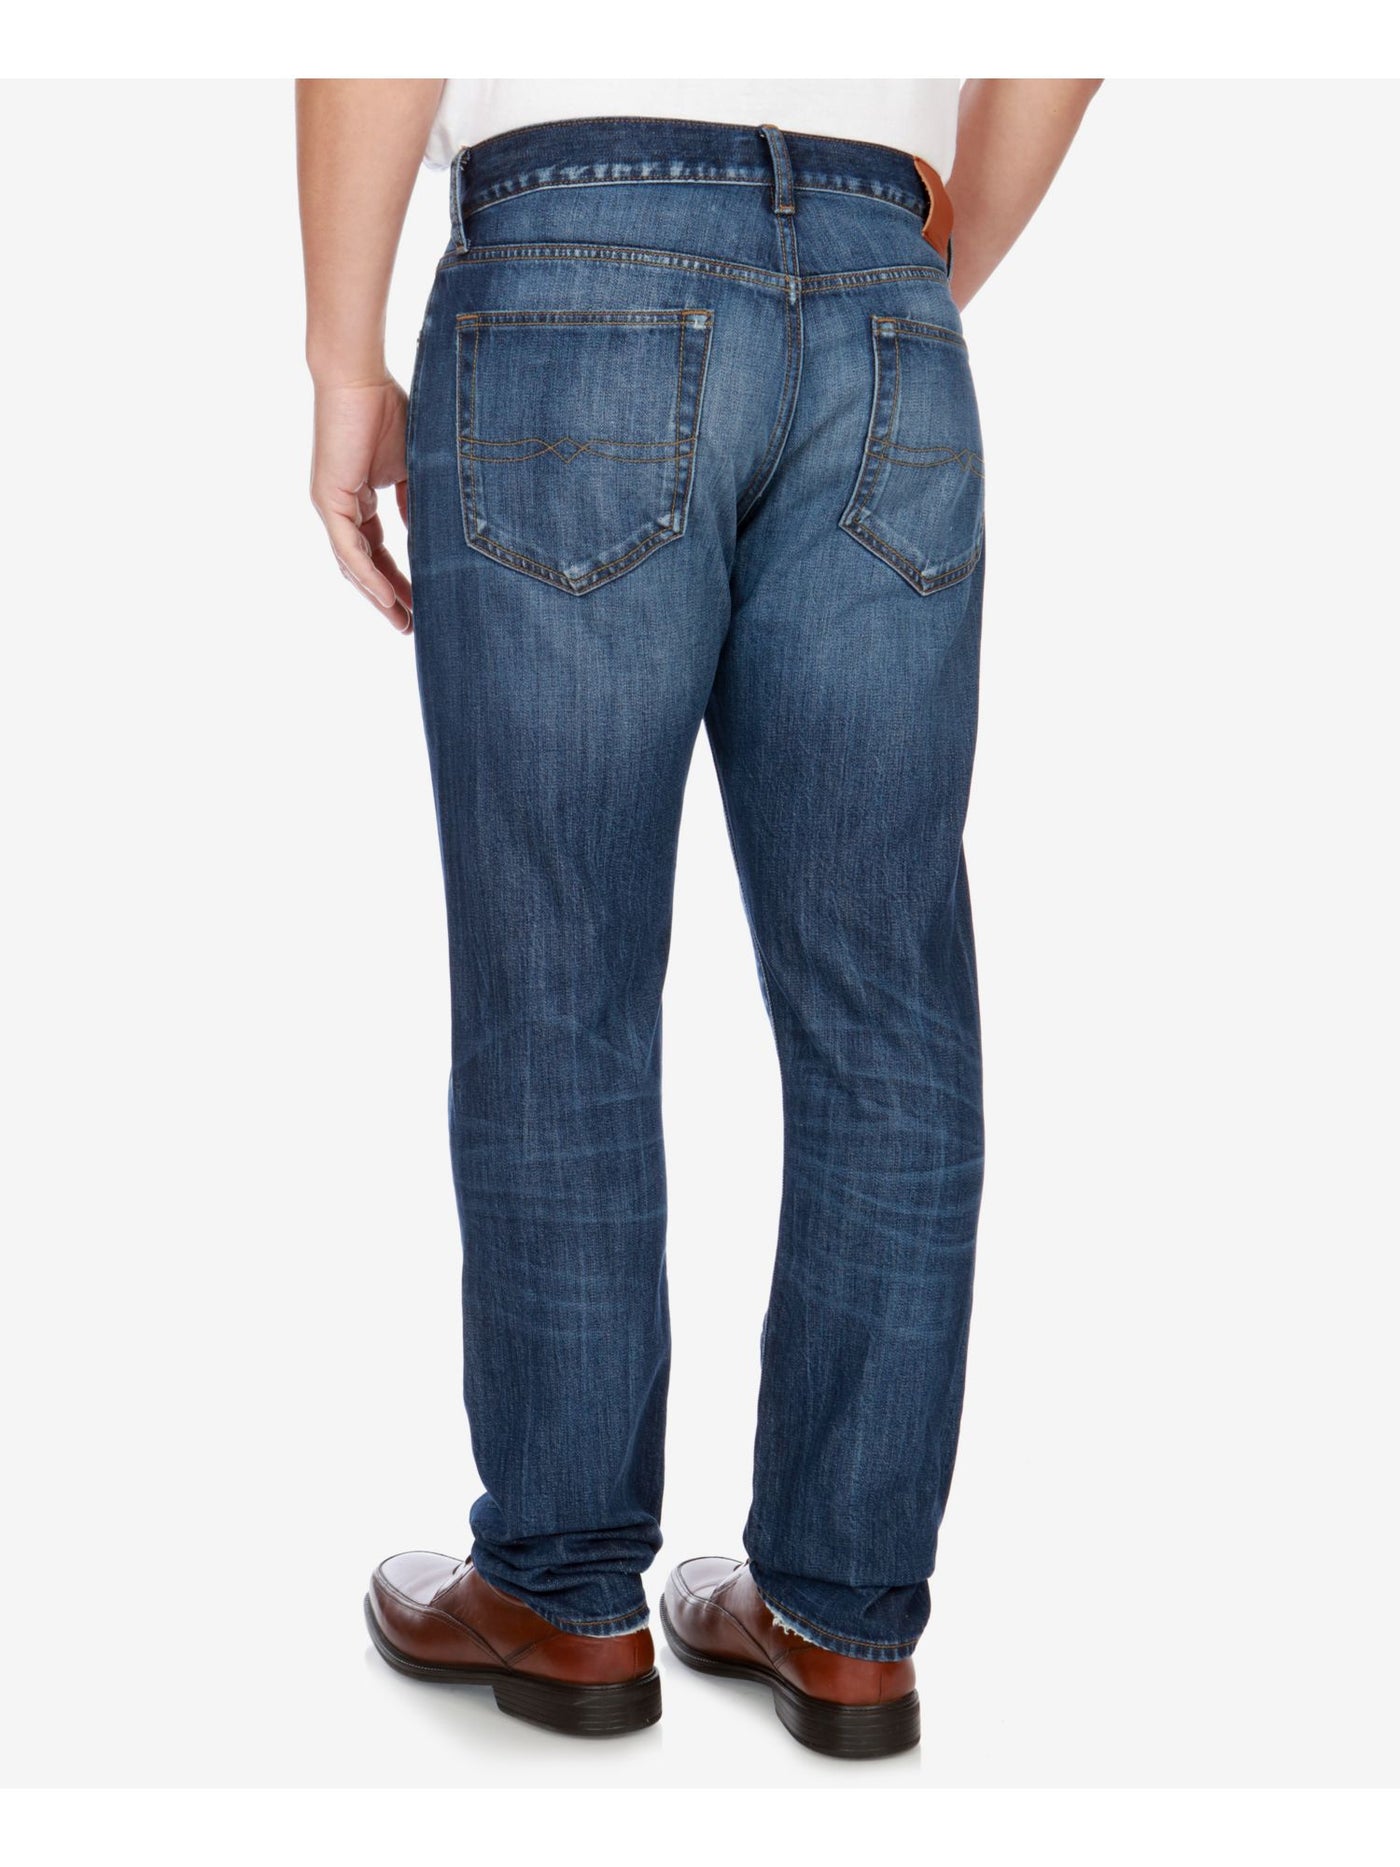 LUCKY BRAND Mens Blue Straight Leg, Denim Jeans W38/ L32